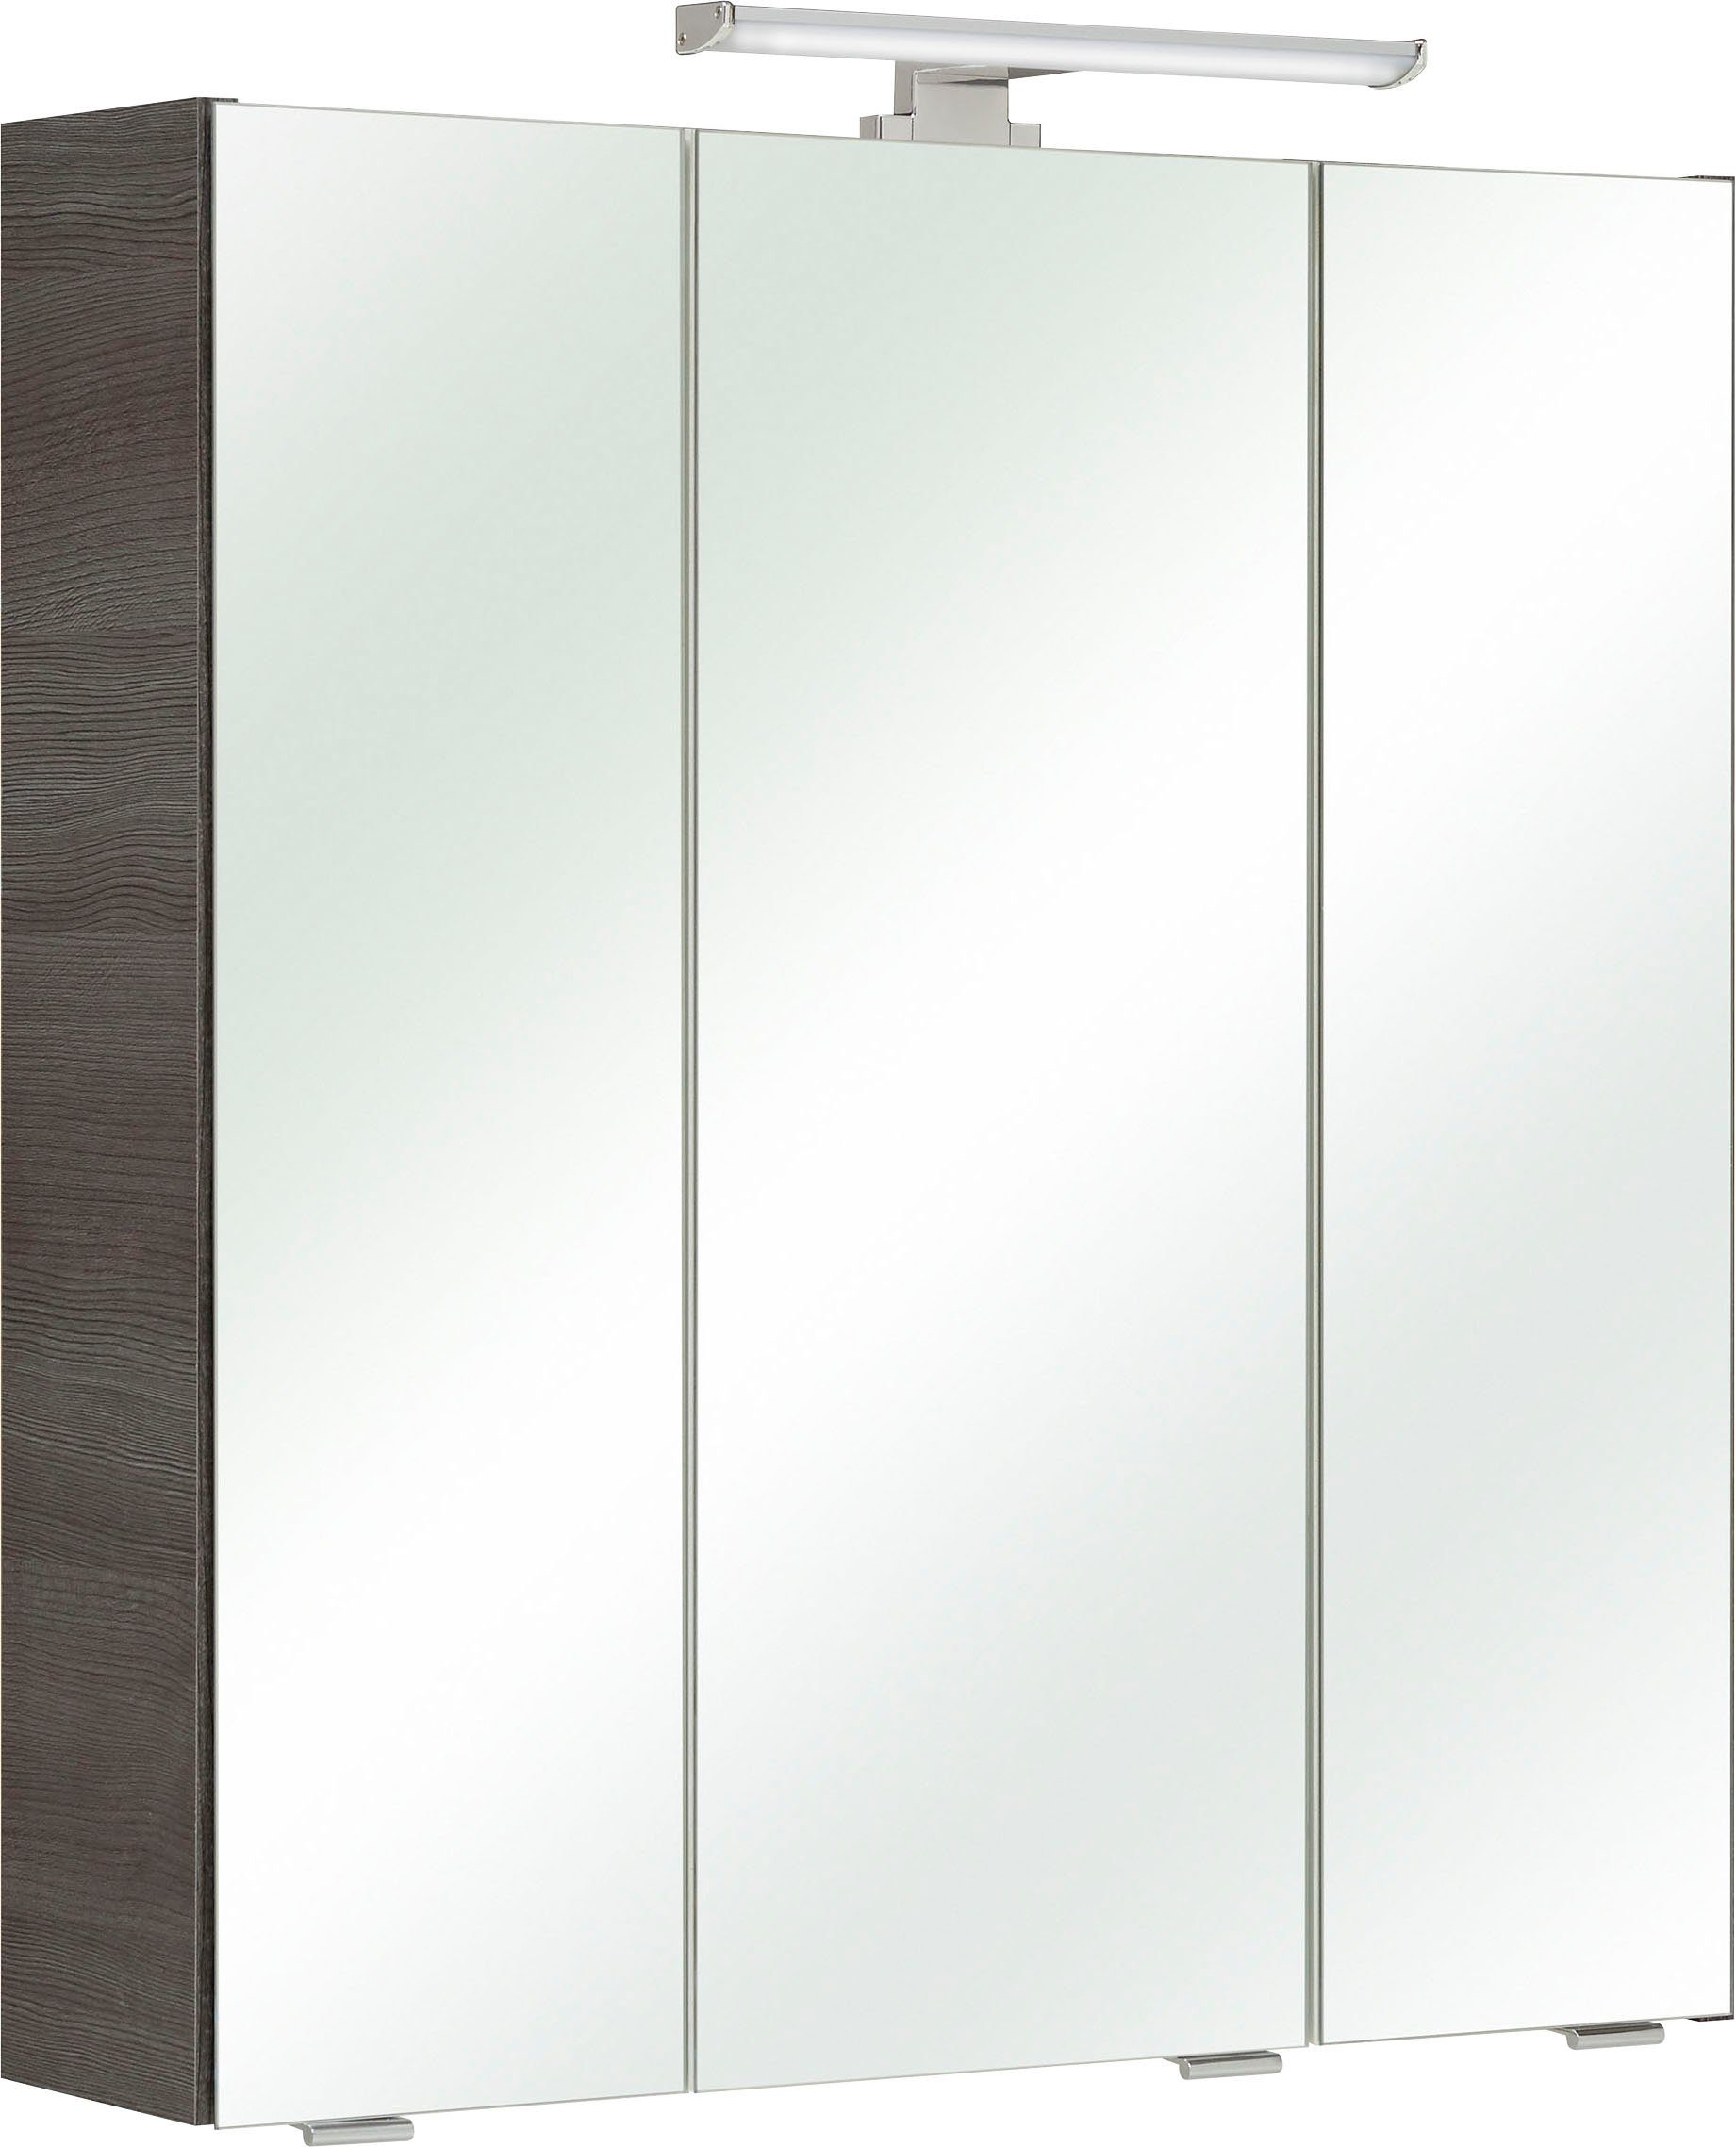 PELIPAL Spiegelschrank Quickset Breite 65 cm, 3-türig, LED-Beleuchtung, Schalter-/Steckdosenbox Graphit/Graphit | Graphit Struktur quer | Spiegelschränke